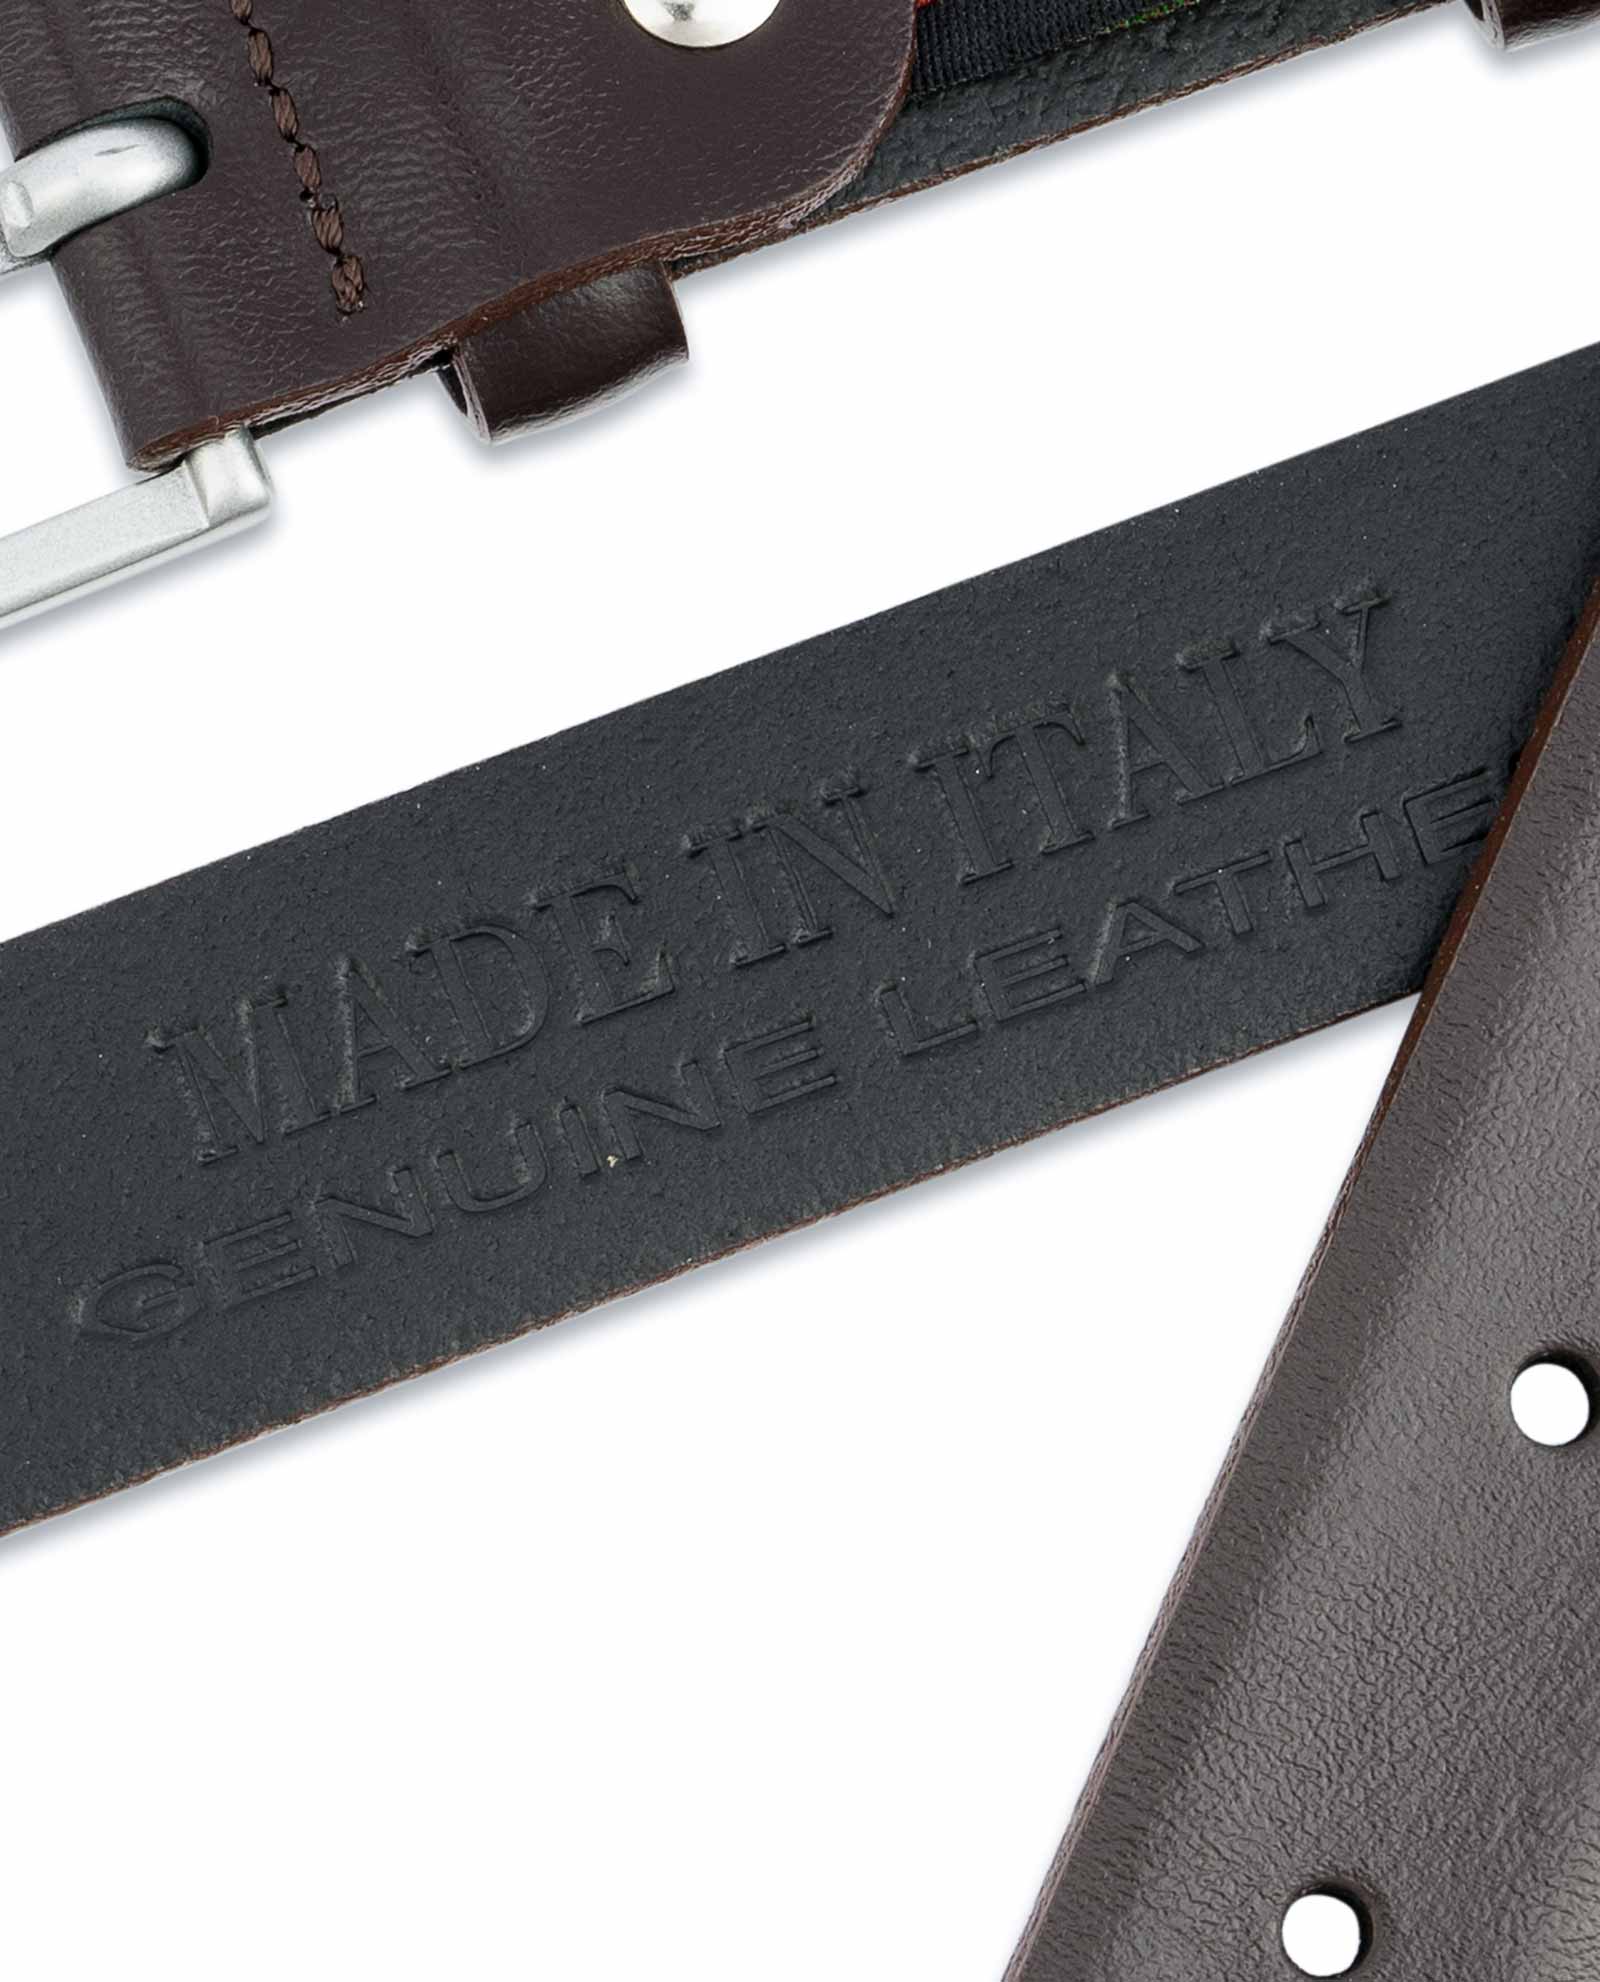 Buy Dark Brown Leather Belt | Narrow 1 inch | LeatherBeltsOnline.com